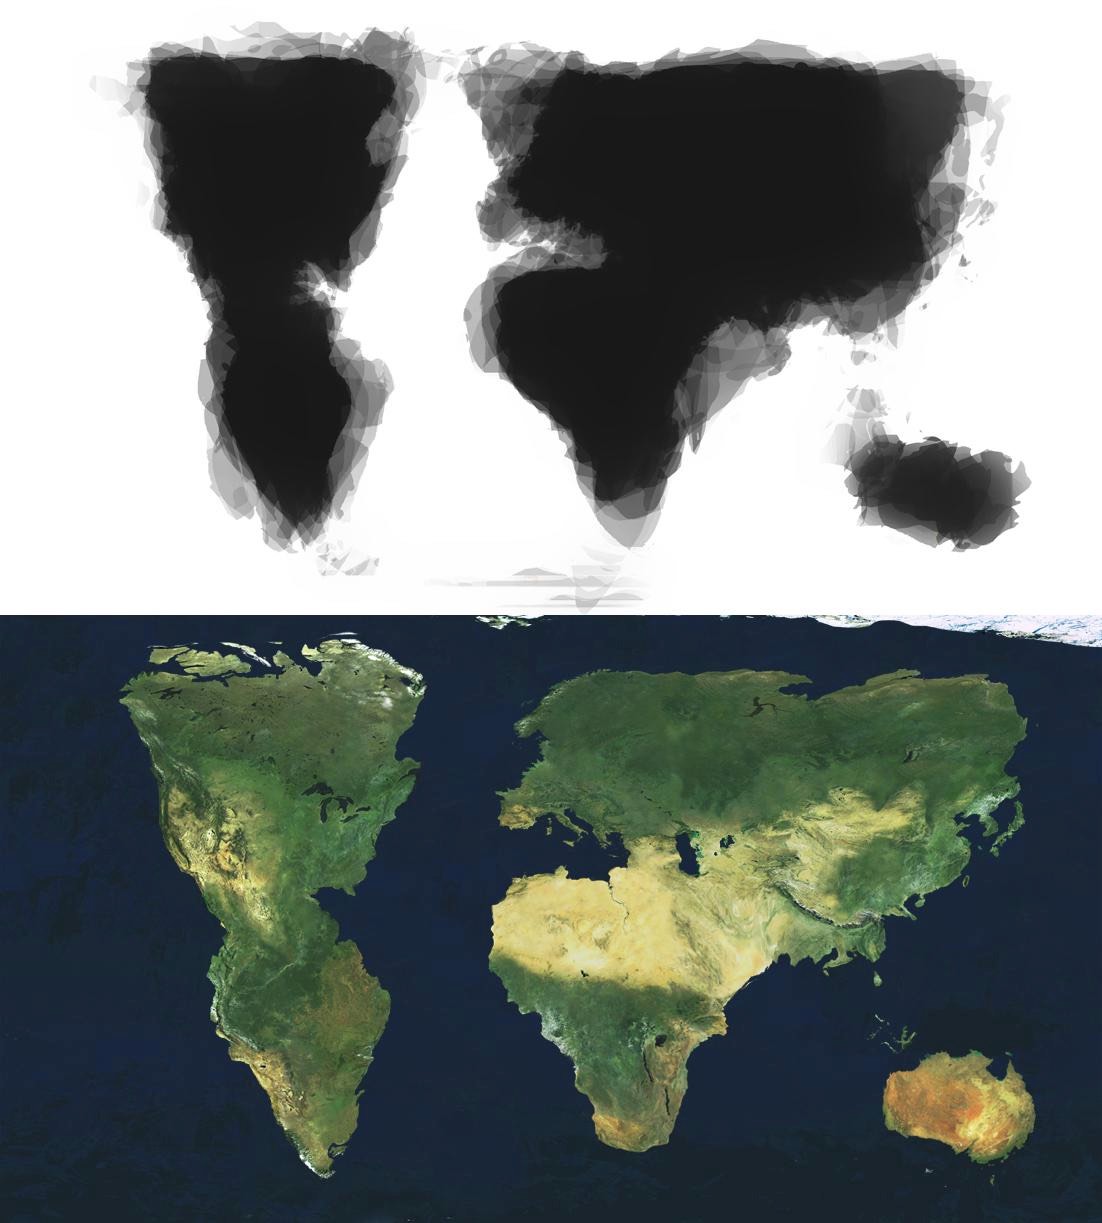 http://kottke.org/17/04/an-average-hand-drawn-map-of-the-world